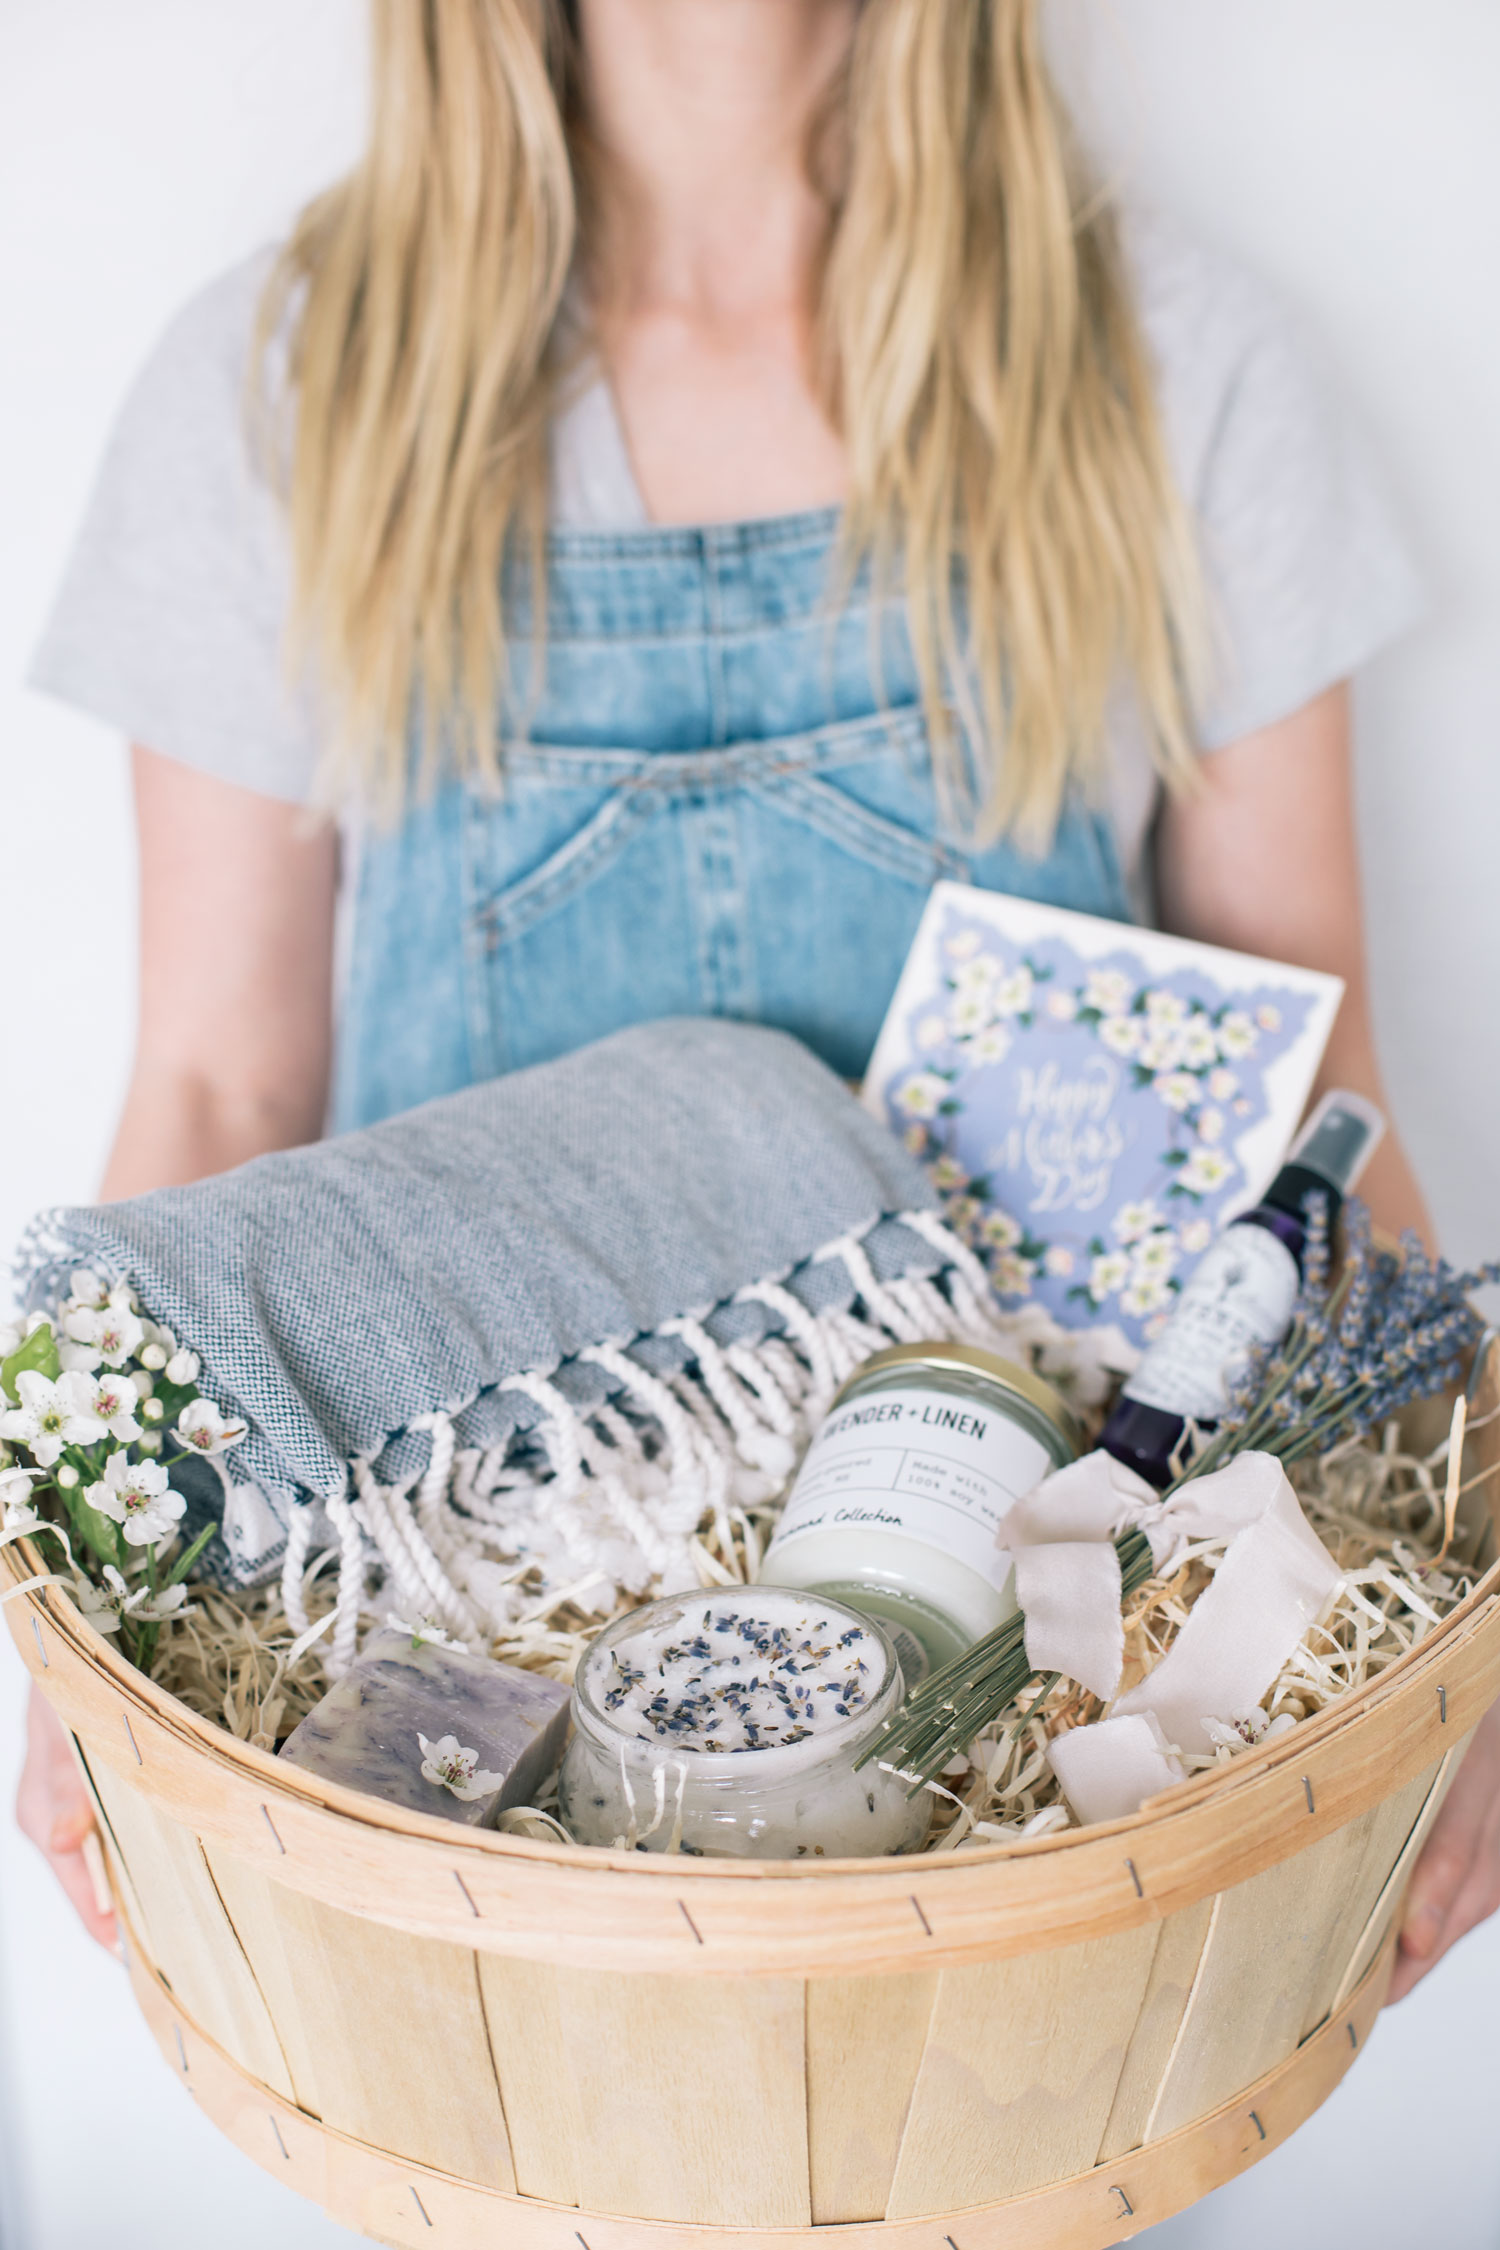 The Lavender Retreat Gift Basket